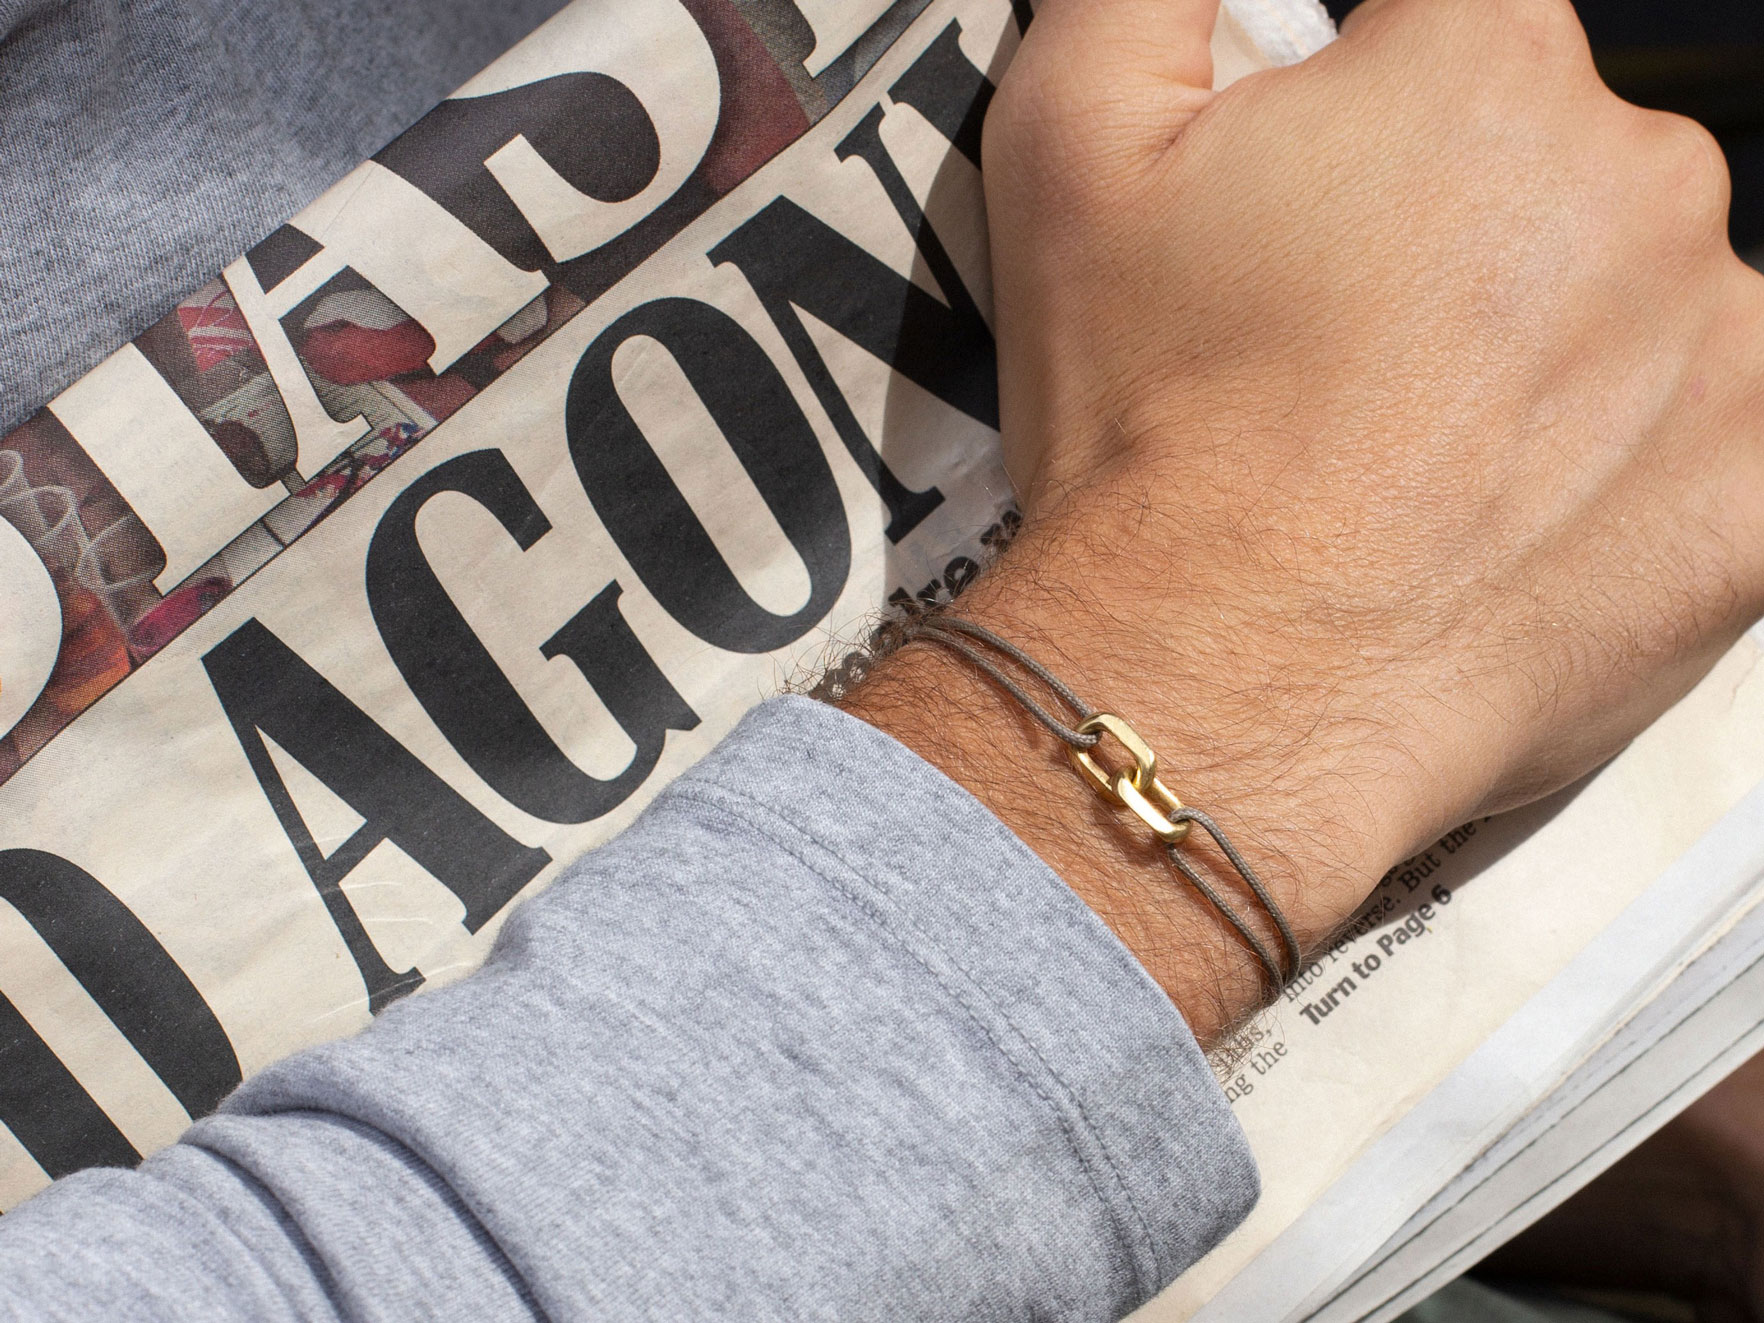 4,240 Girl Wearing Gold Bracelet Images, Stock Photos & Vectors |  Shutterstock